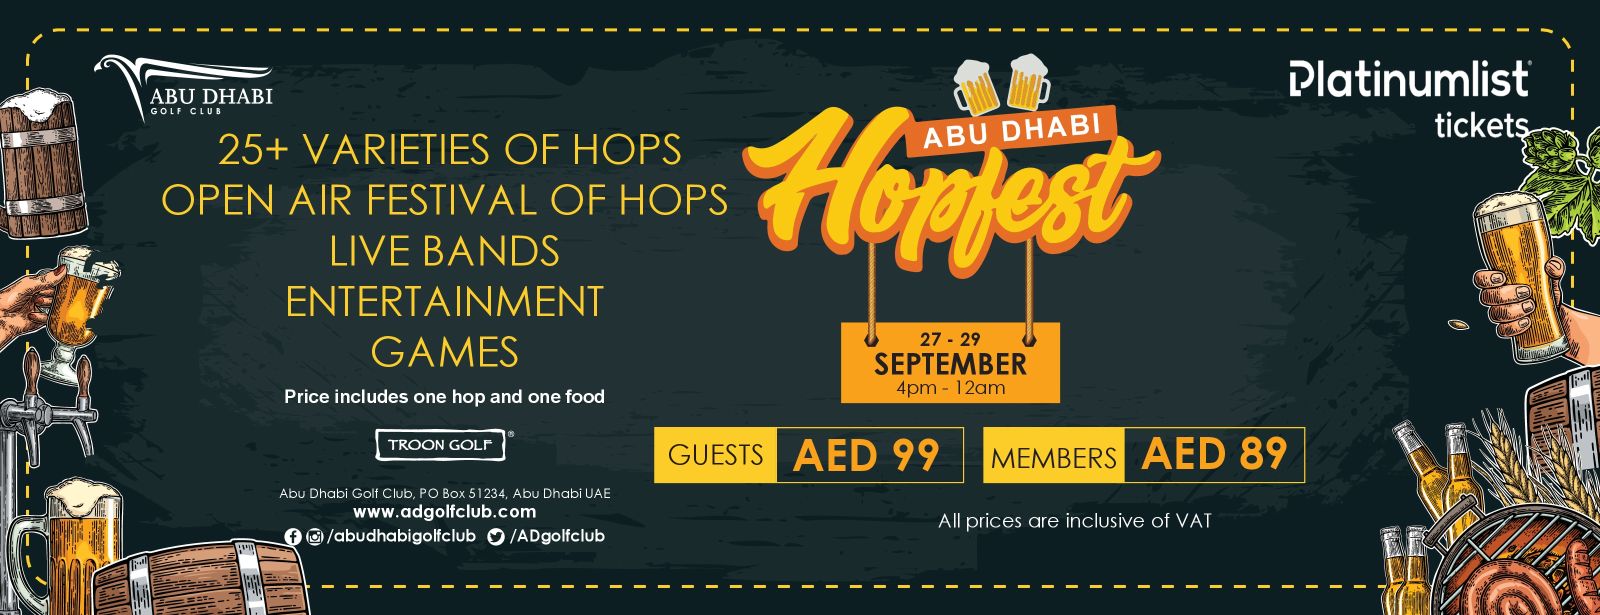 Abu Dhabi HopFest - Coming Soon in UAE